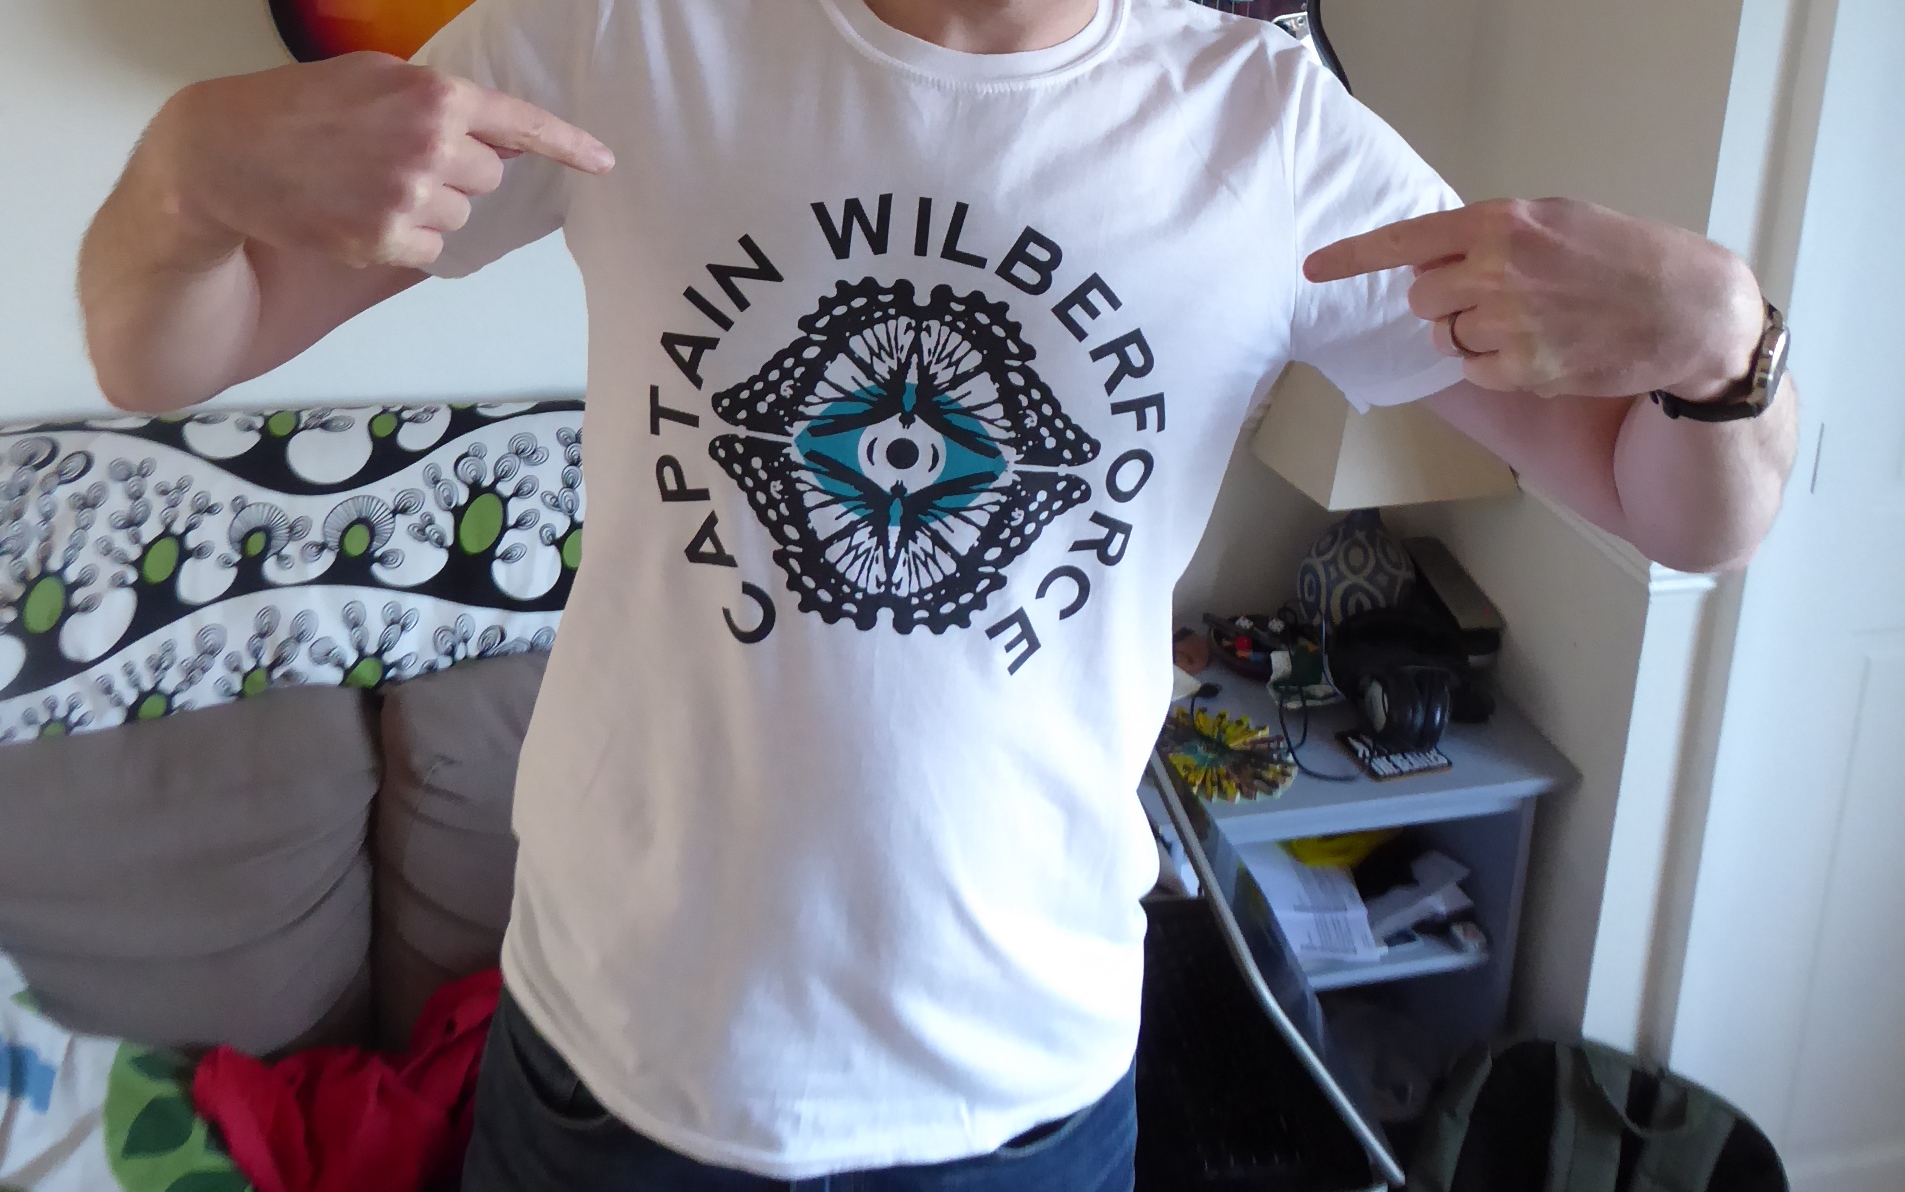 Captain Wilberforce T-shirt